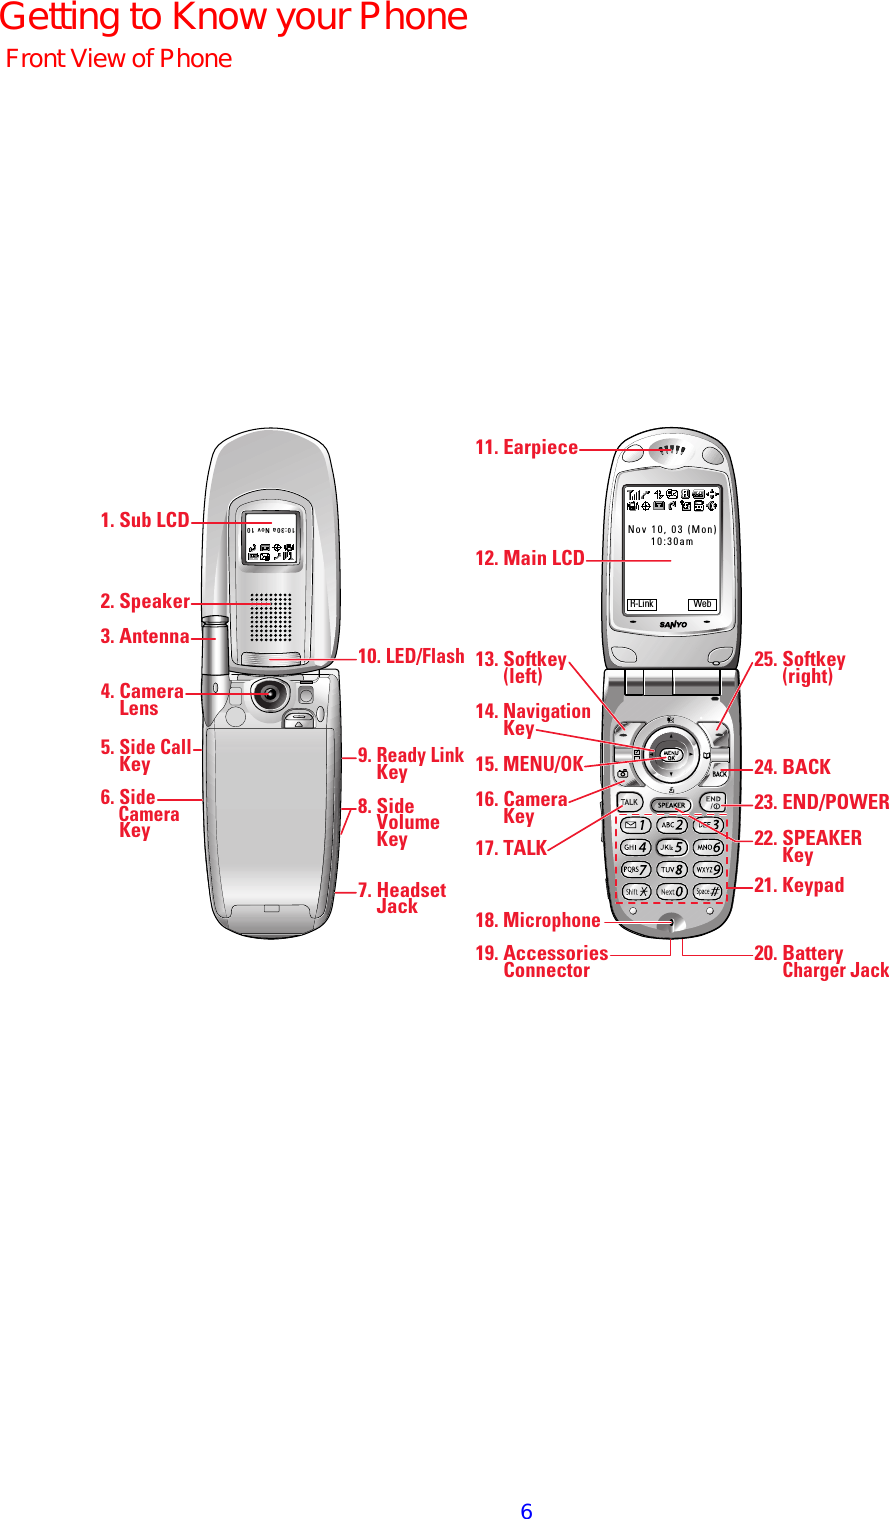 Nov 10, 03 (Mon)10:30amR-Link Web10:30a Nov 1025. Softkey      (right)4. Camera    Lens5. Side Call    Key13. Softkey      (left)17. TALK14. Navigation      Key15. MENU/OK16. Camera      Key12. Main LCD19. Accessories      Connector21. Keypad20. Battery      Charger Jack2. Speaker3. Antenna1. Sub LCD6. Side     Camera    Key18. Microphone11. Earpiece23. END/POWER10. LED/Flash9. Ready Link    Key7. Headset    Jack8. Side     Volume    Key24. BACK22. SPEAKER      KeyGetting to Know your PhoneFront View of Phone6